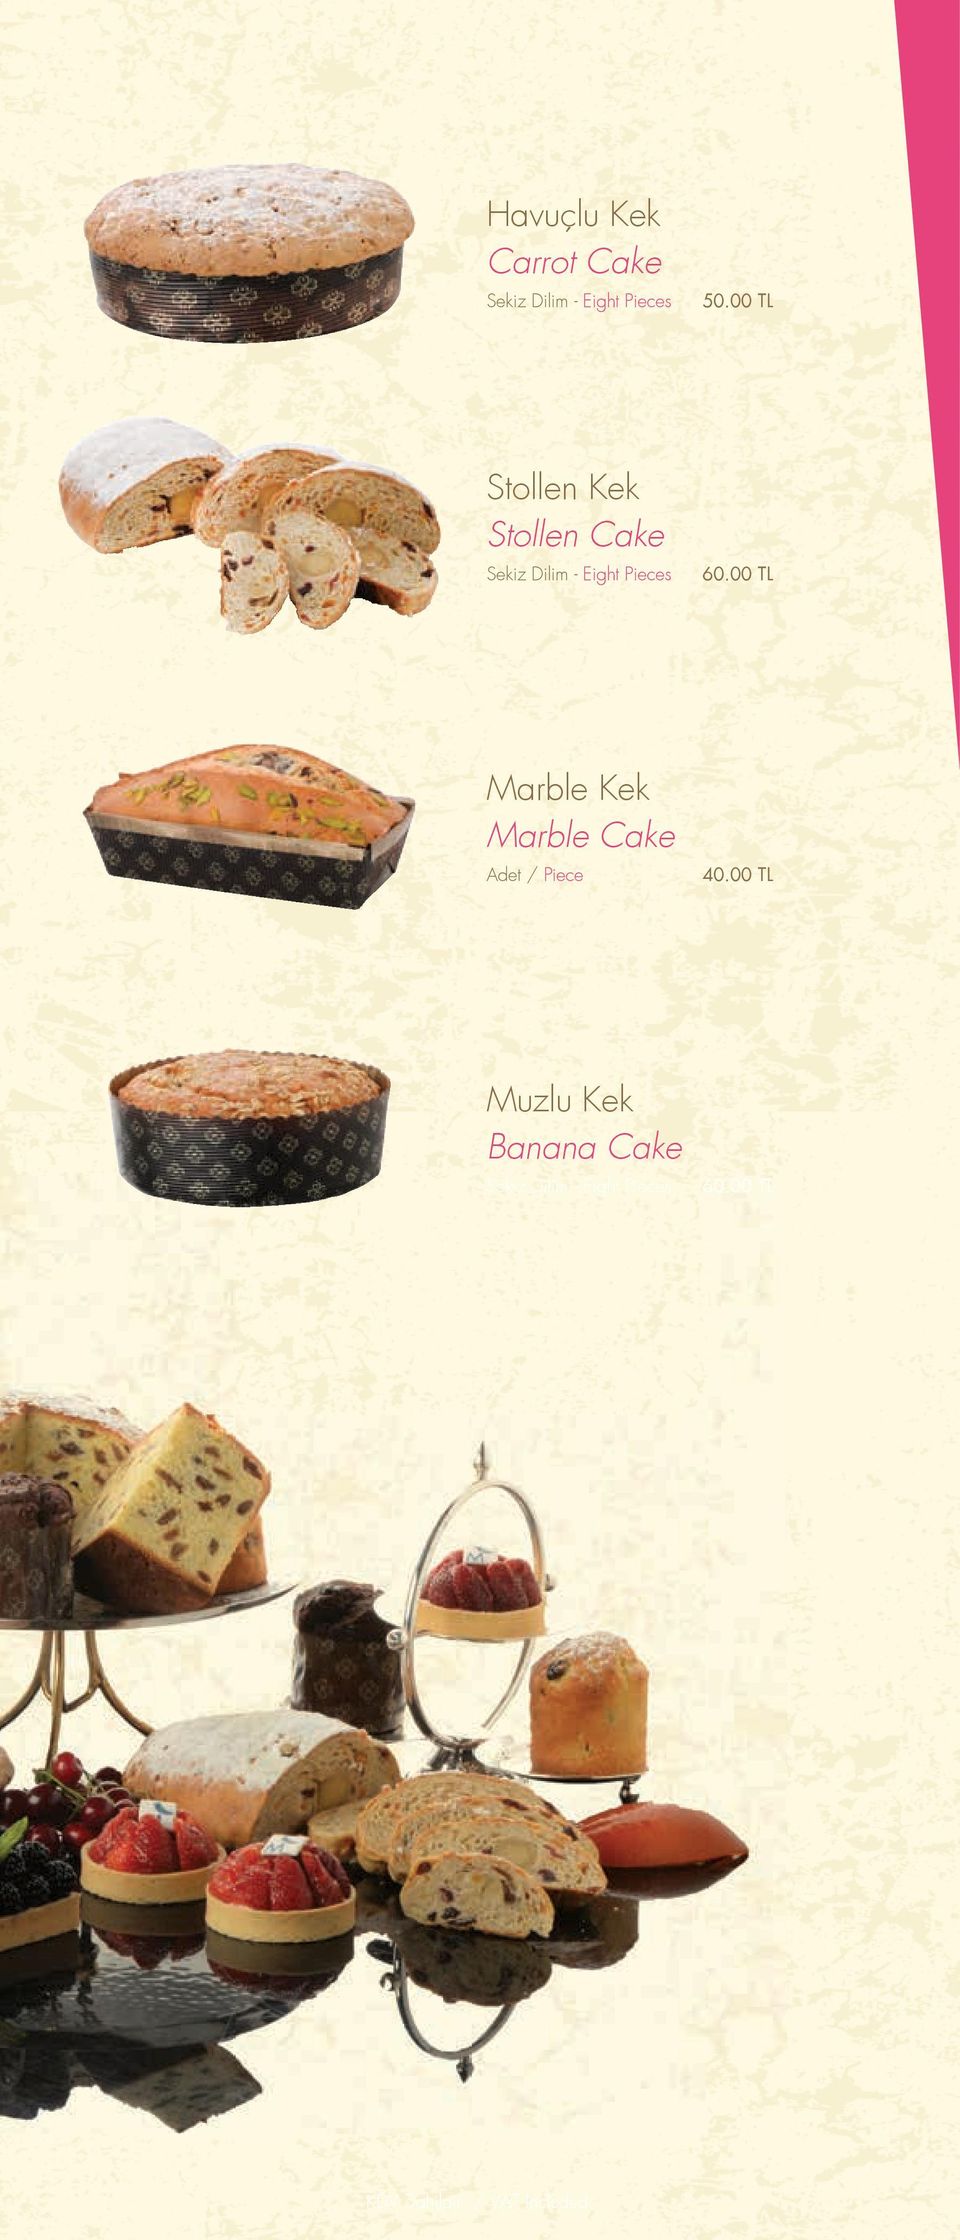 00 TL Marble Kek Marble Cake Adet / Piece